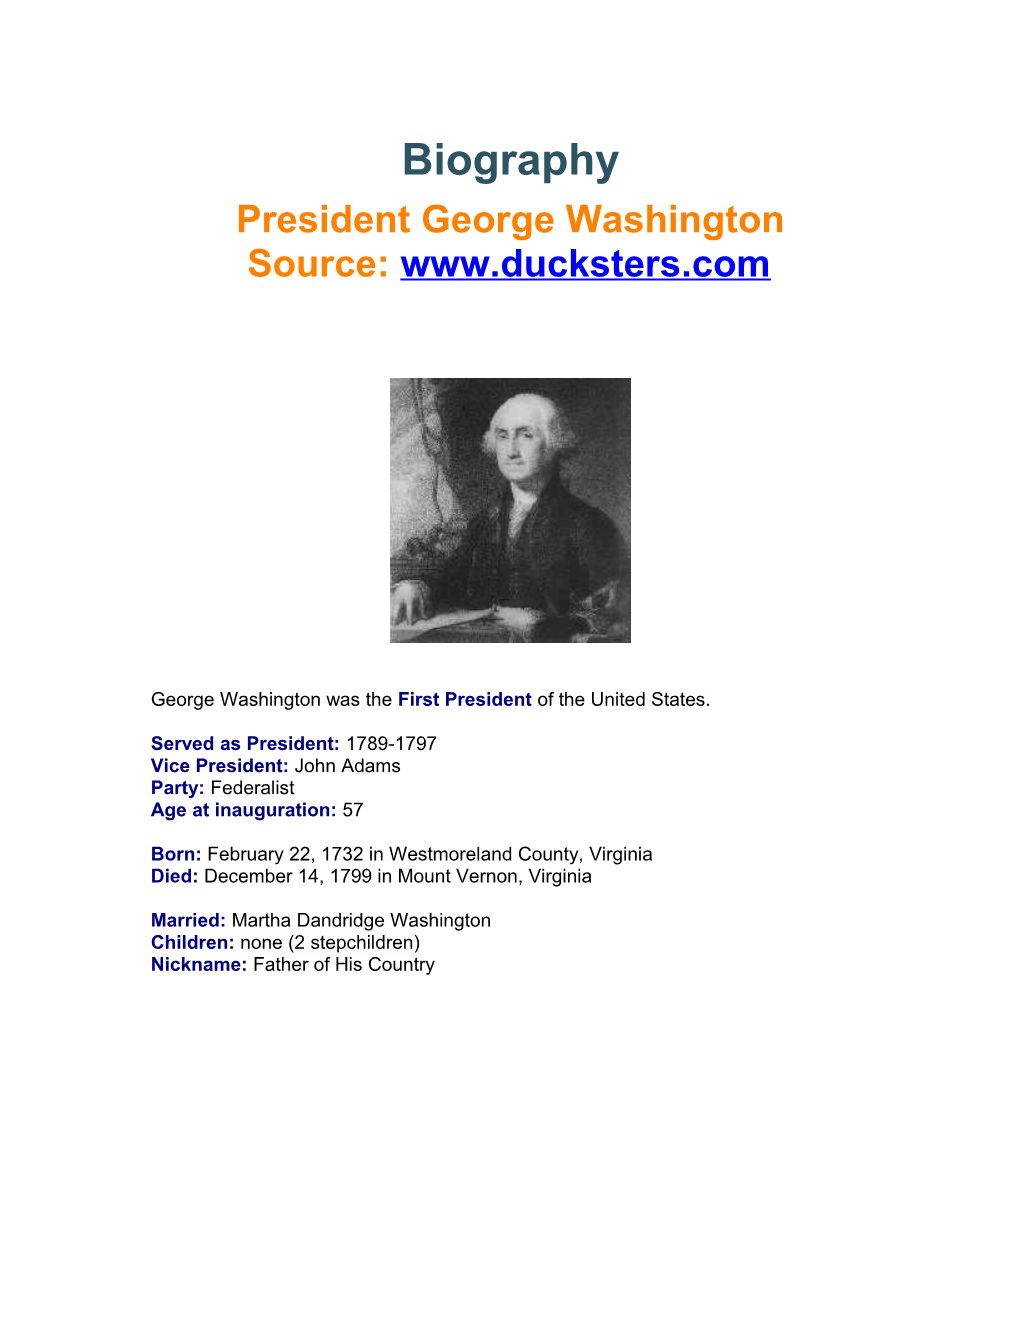 President George Washington Source